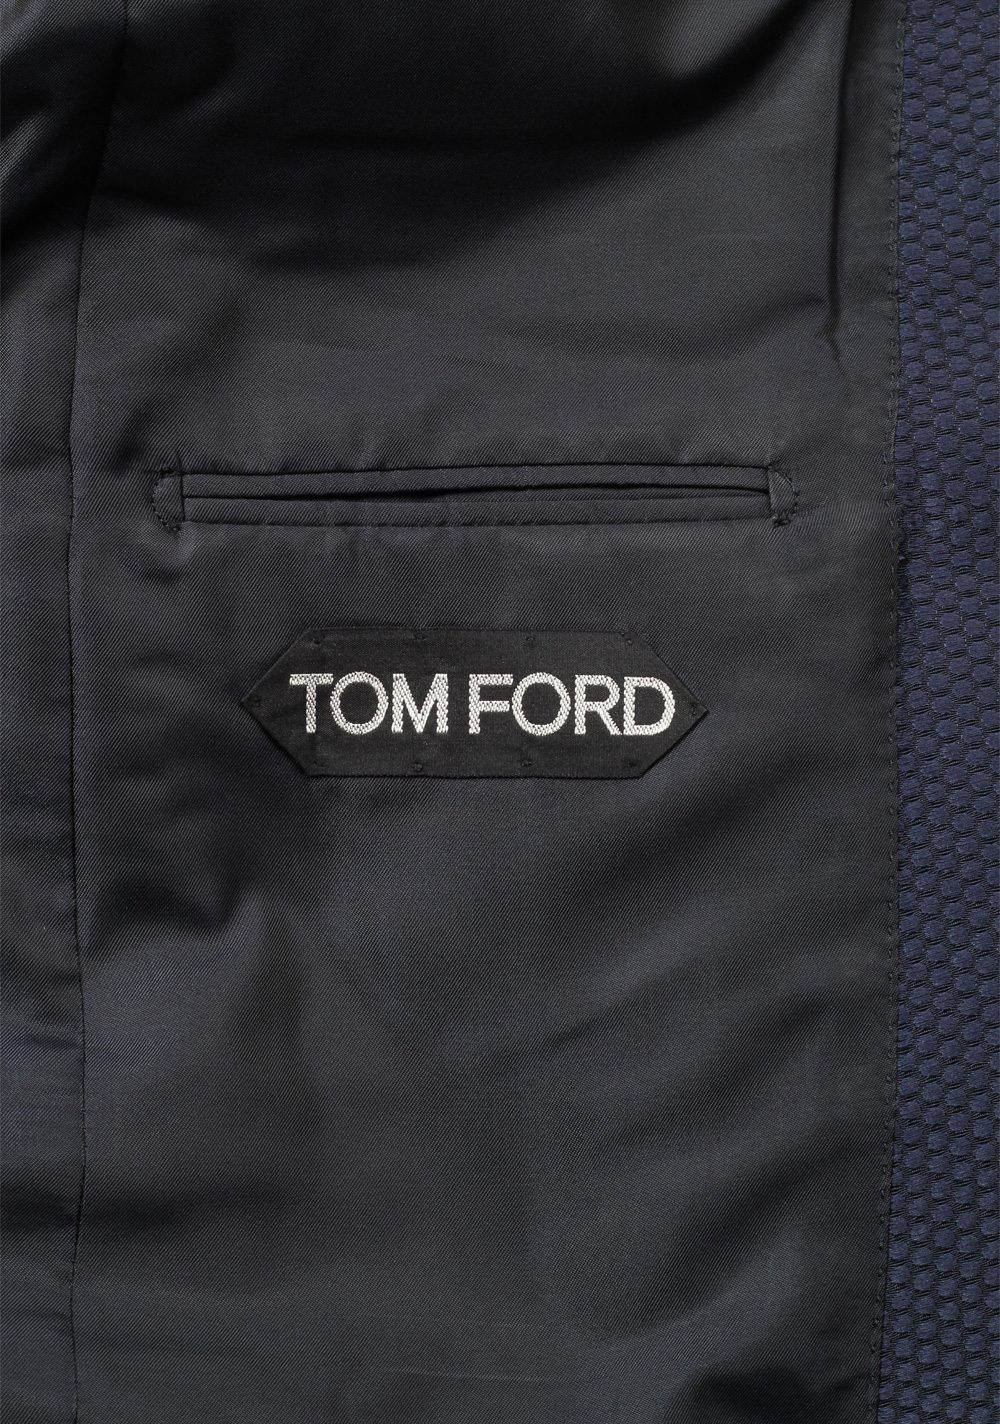 TOM FORD Windsor Blue Sport Coat Tuxedo Dinner Jacket Size 50 / 40R U.S ...